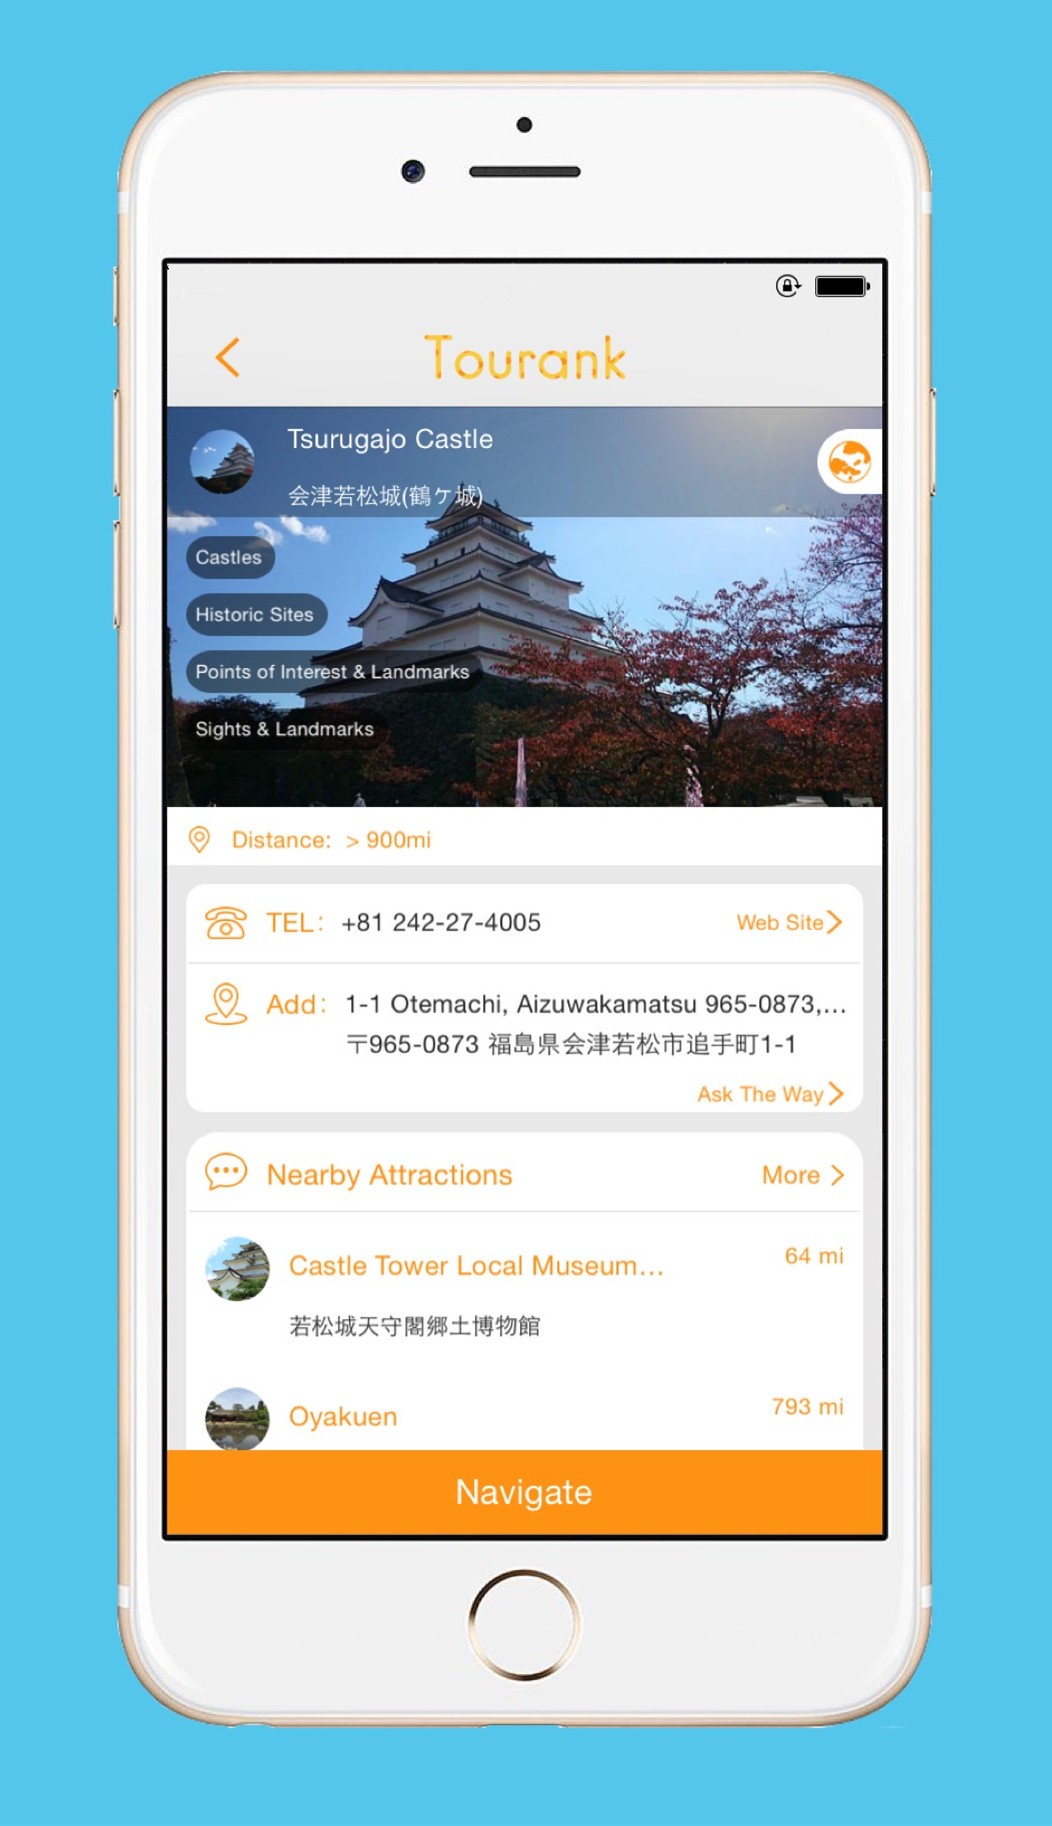 Tourank Smart Mobile Travel Guide on Japan